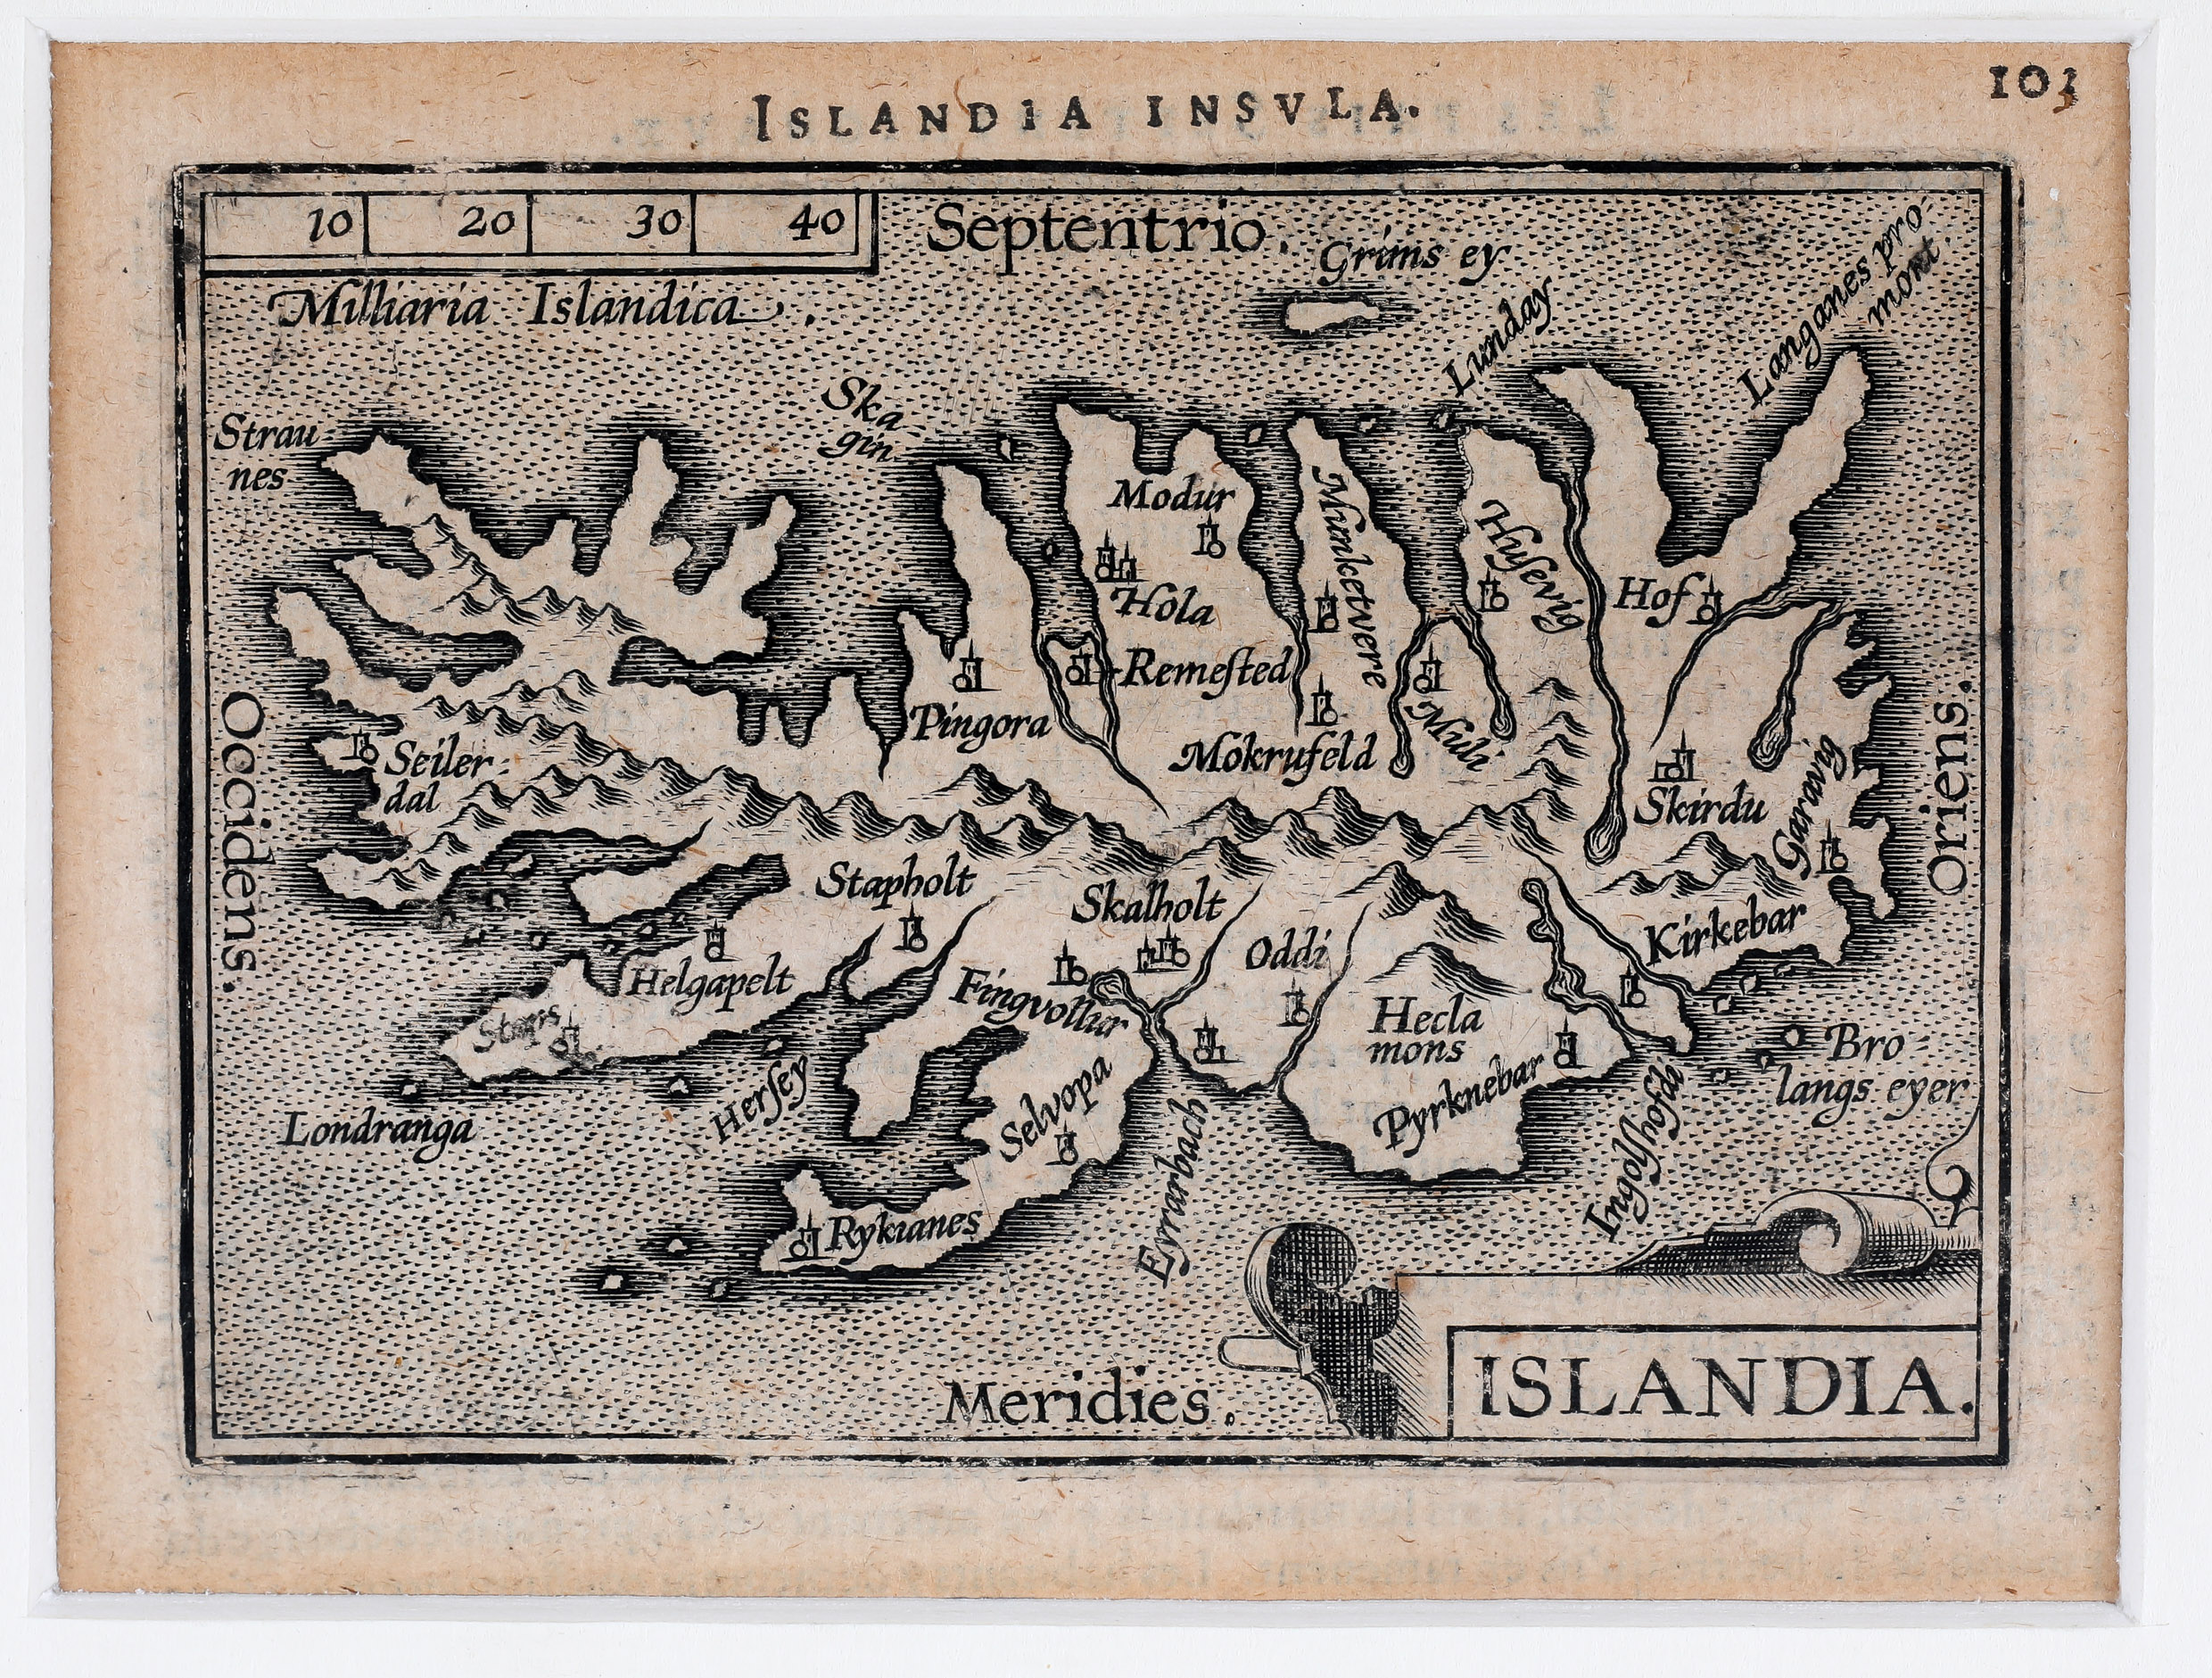 11. Islandia (Islandia Insula)